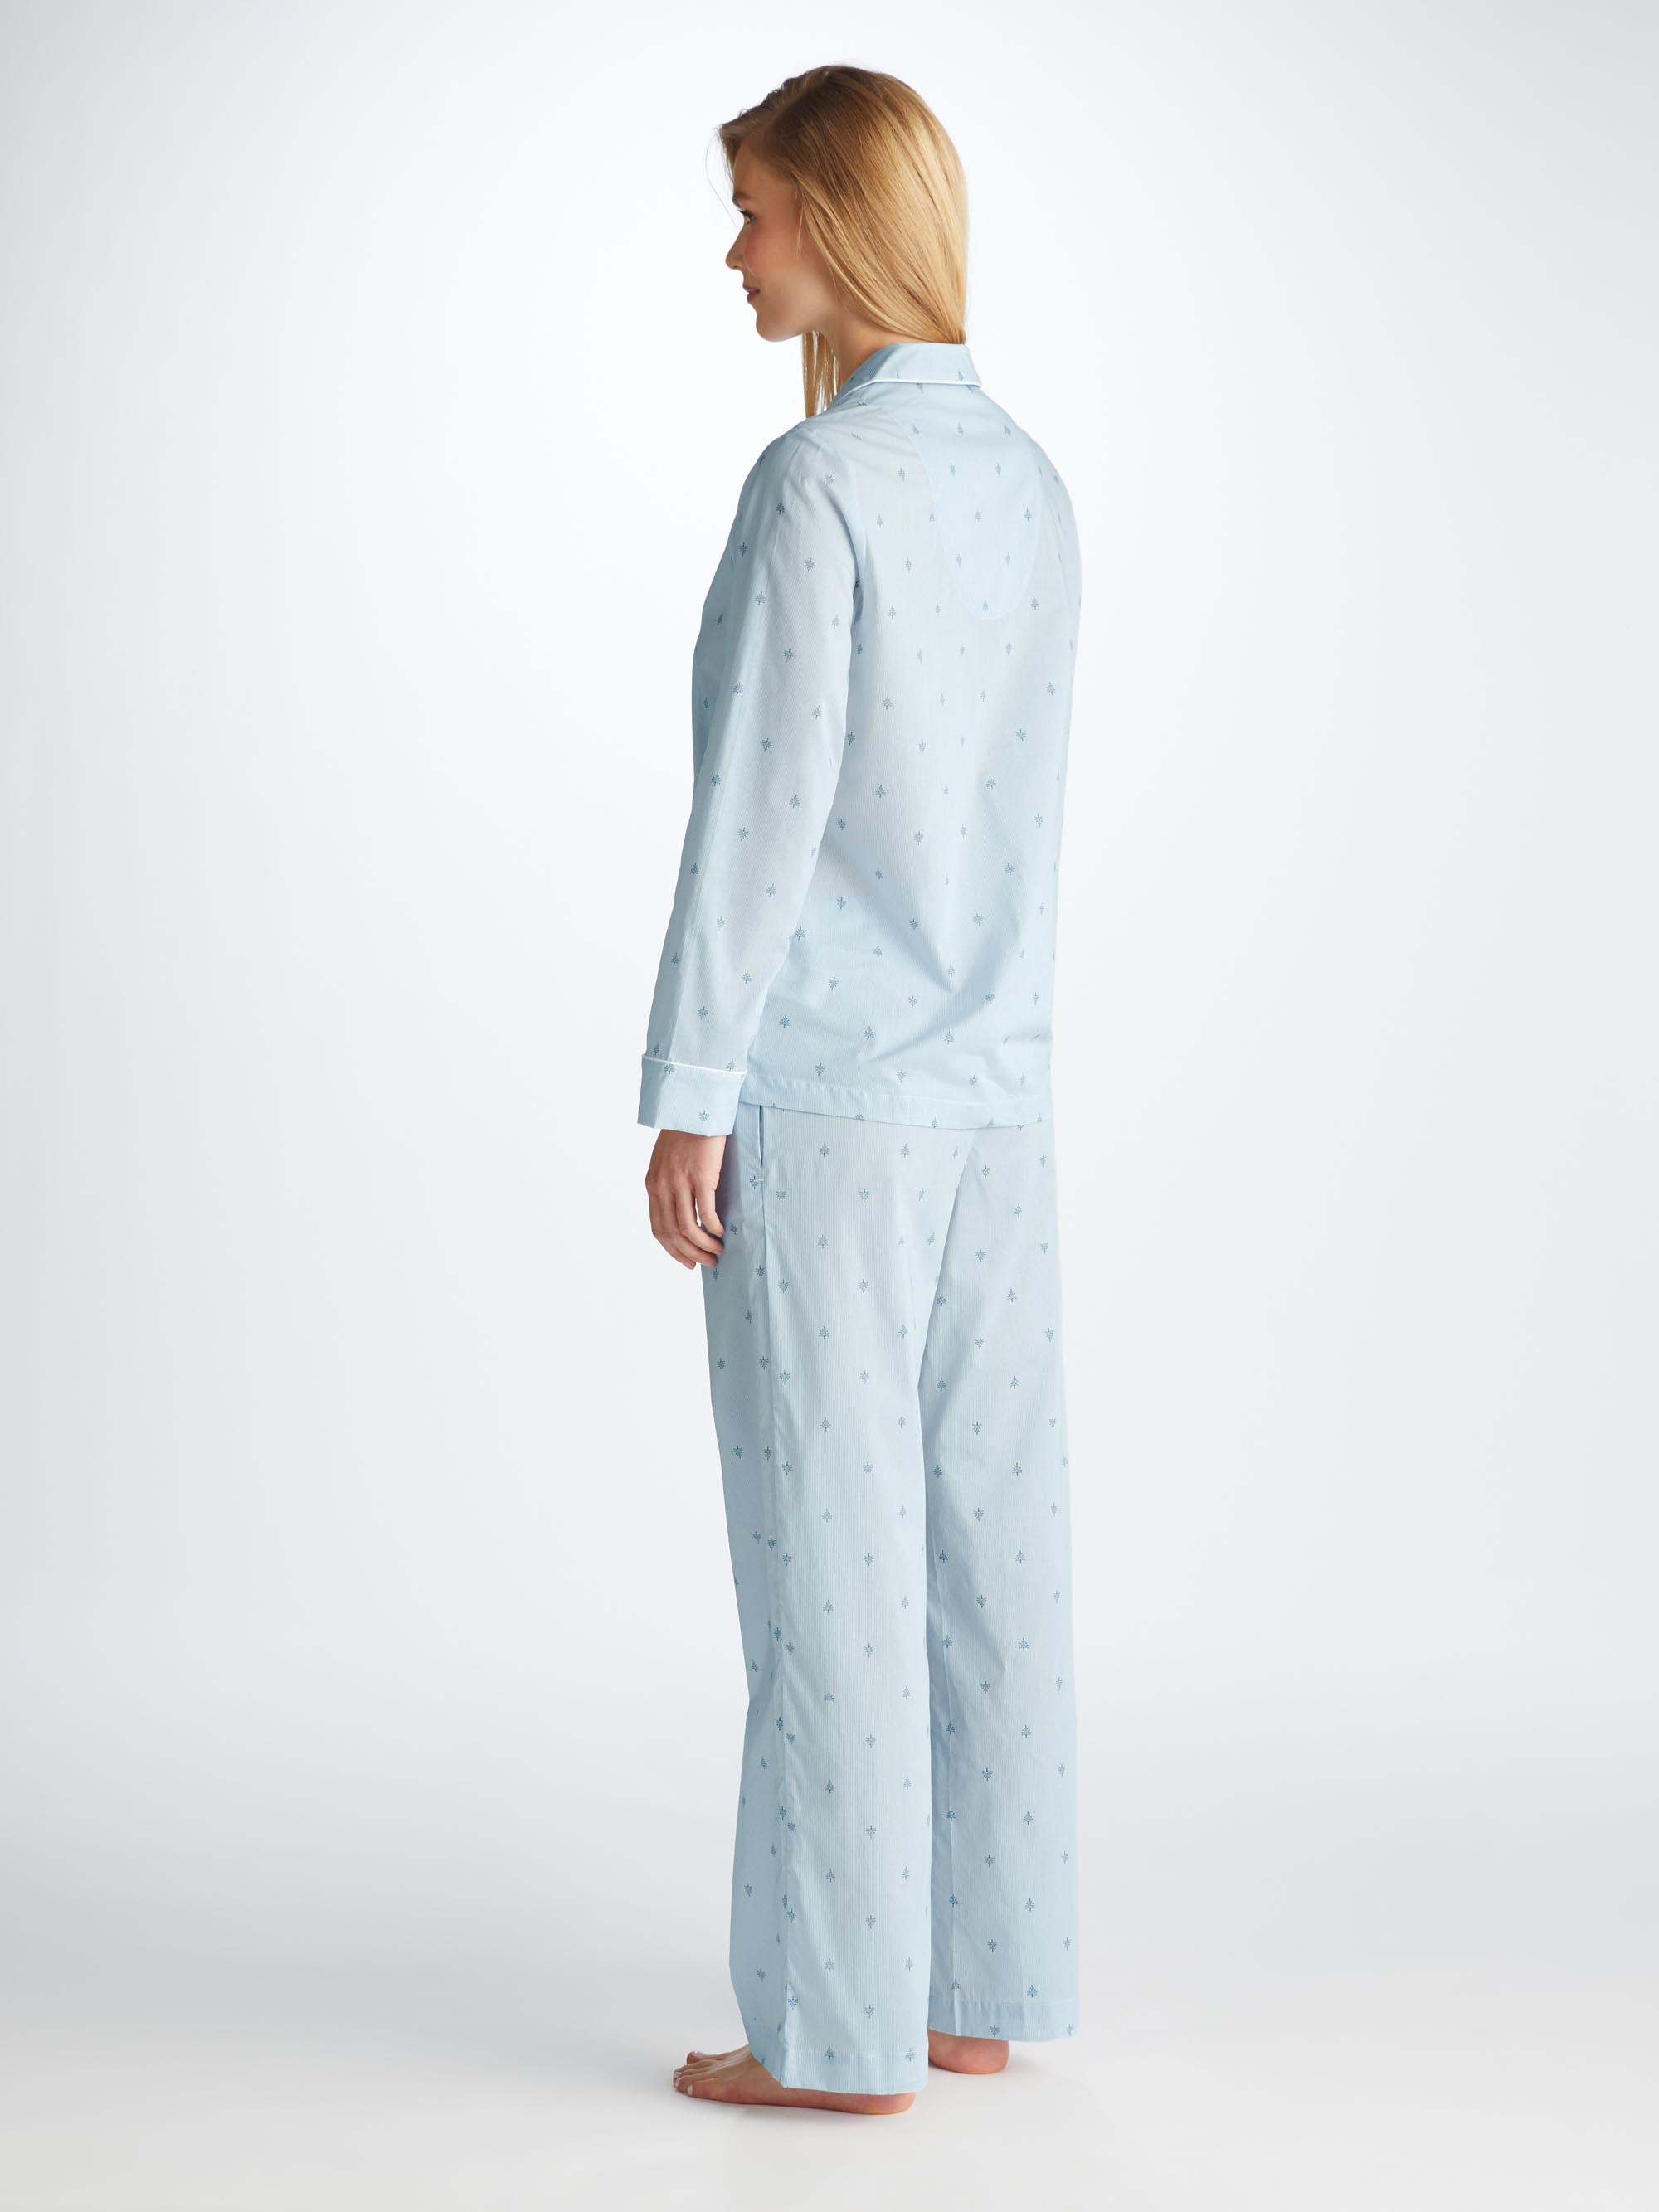 Women's Pyjamas Nelson 100 Cotton Batiste Blue